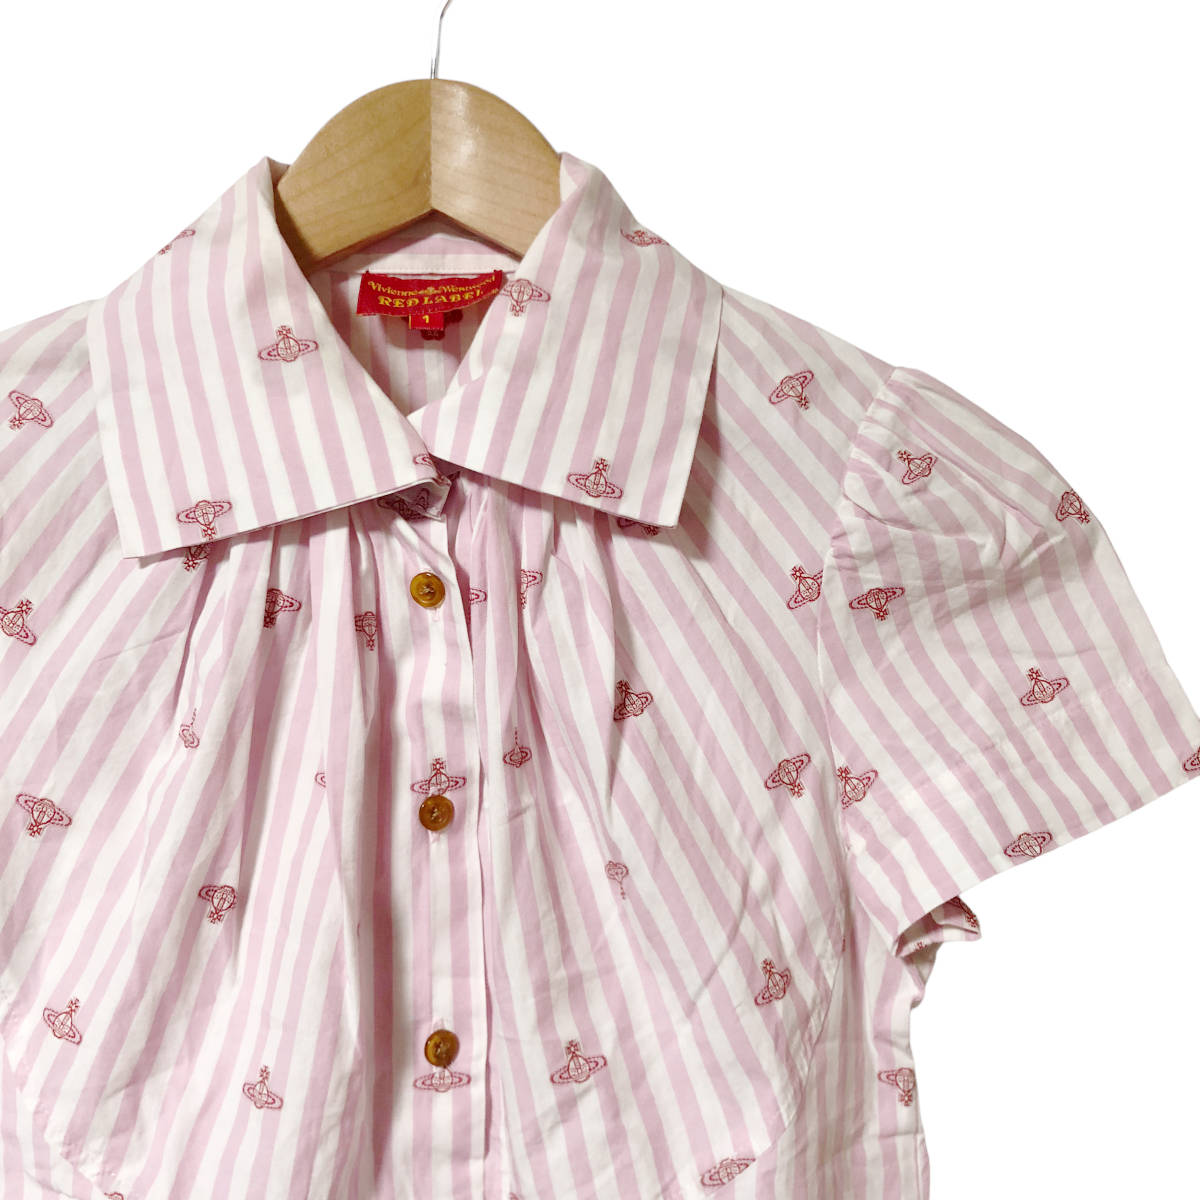 Vivienne Westwood RED LABEL ヴィヴィアンウエストウッド シャツ ブラウス オーブ 刺繍 総柄 半袖 ストライプ 1 白 ピンク レディース A22_画像5